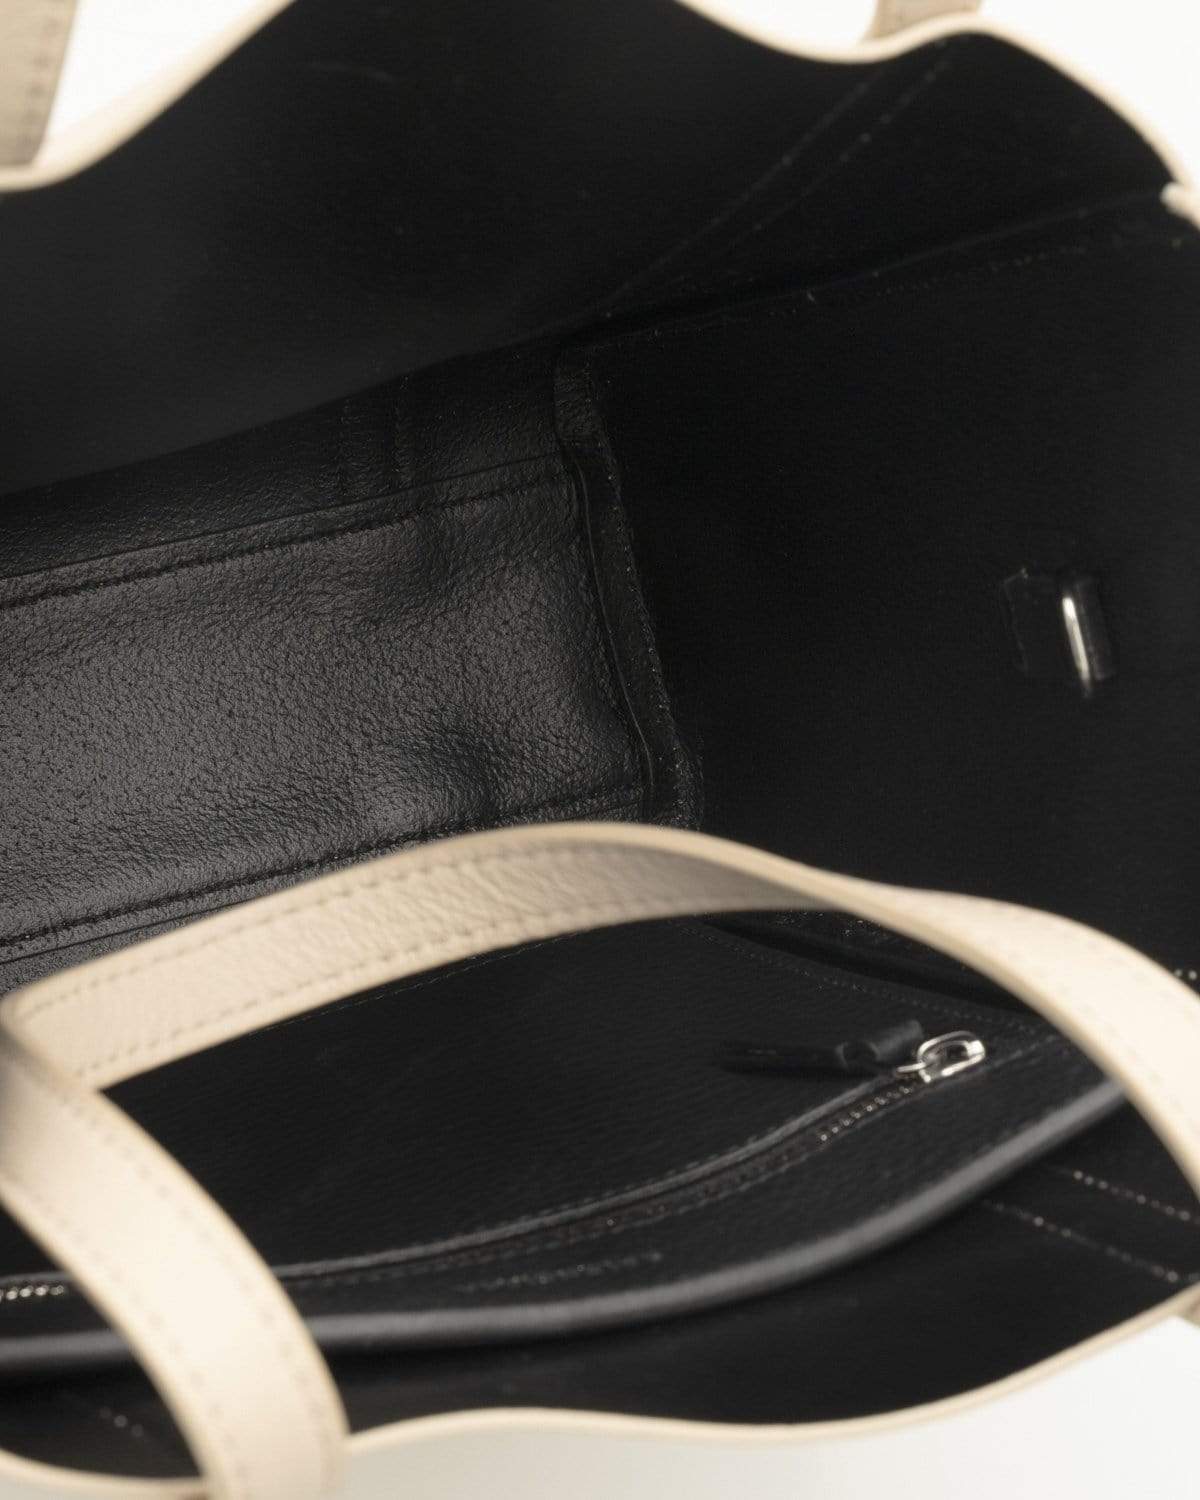 Balenciaga Balenciaga Cream Leather Soft Tote Bag - AGL1491